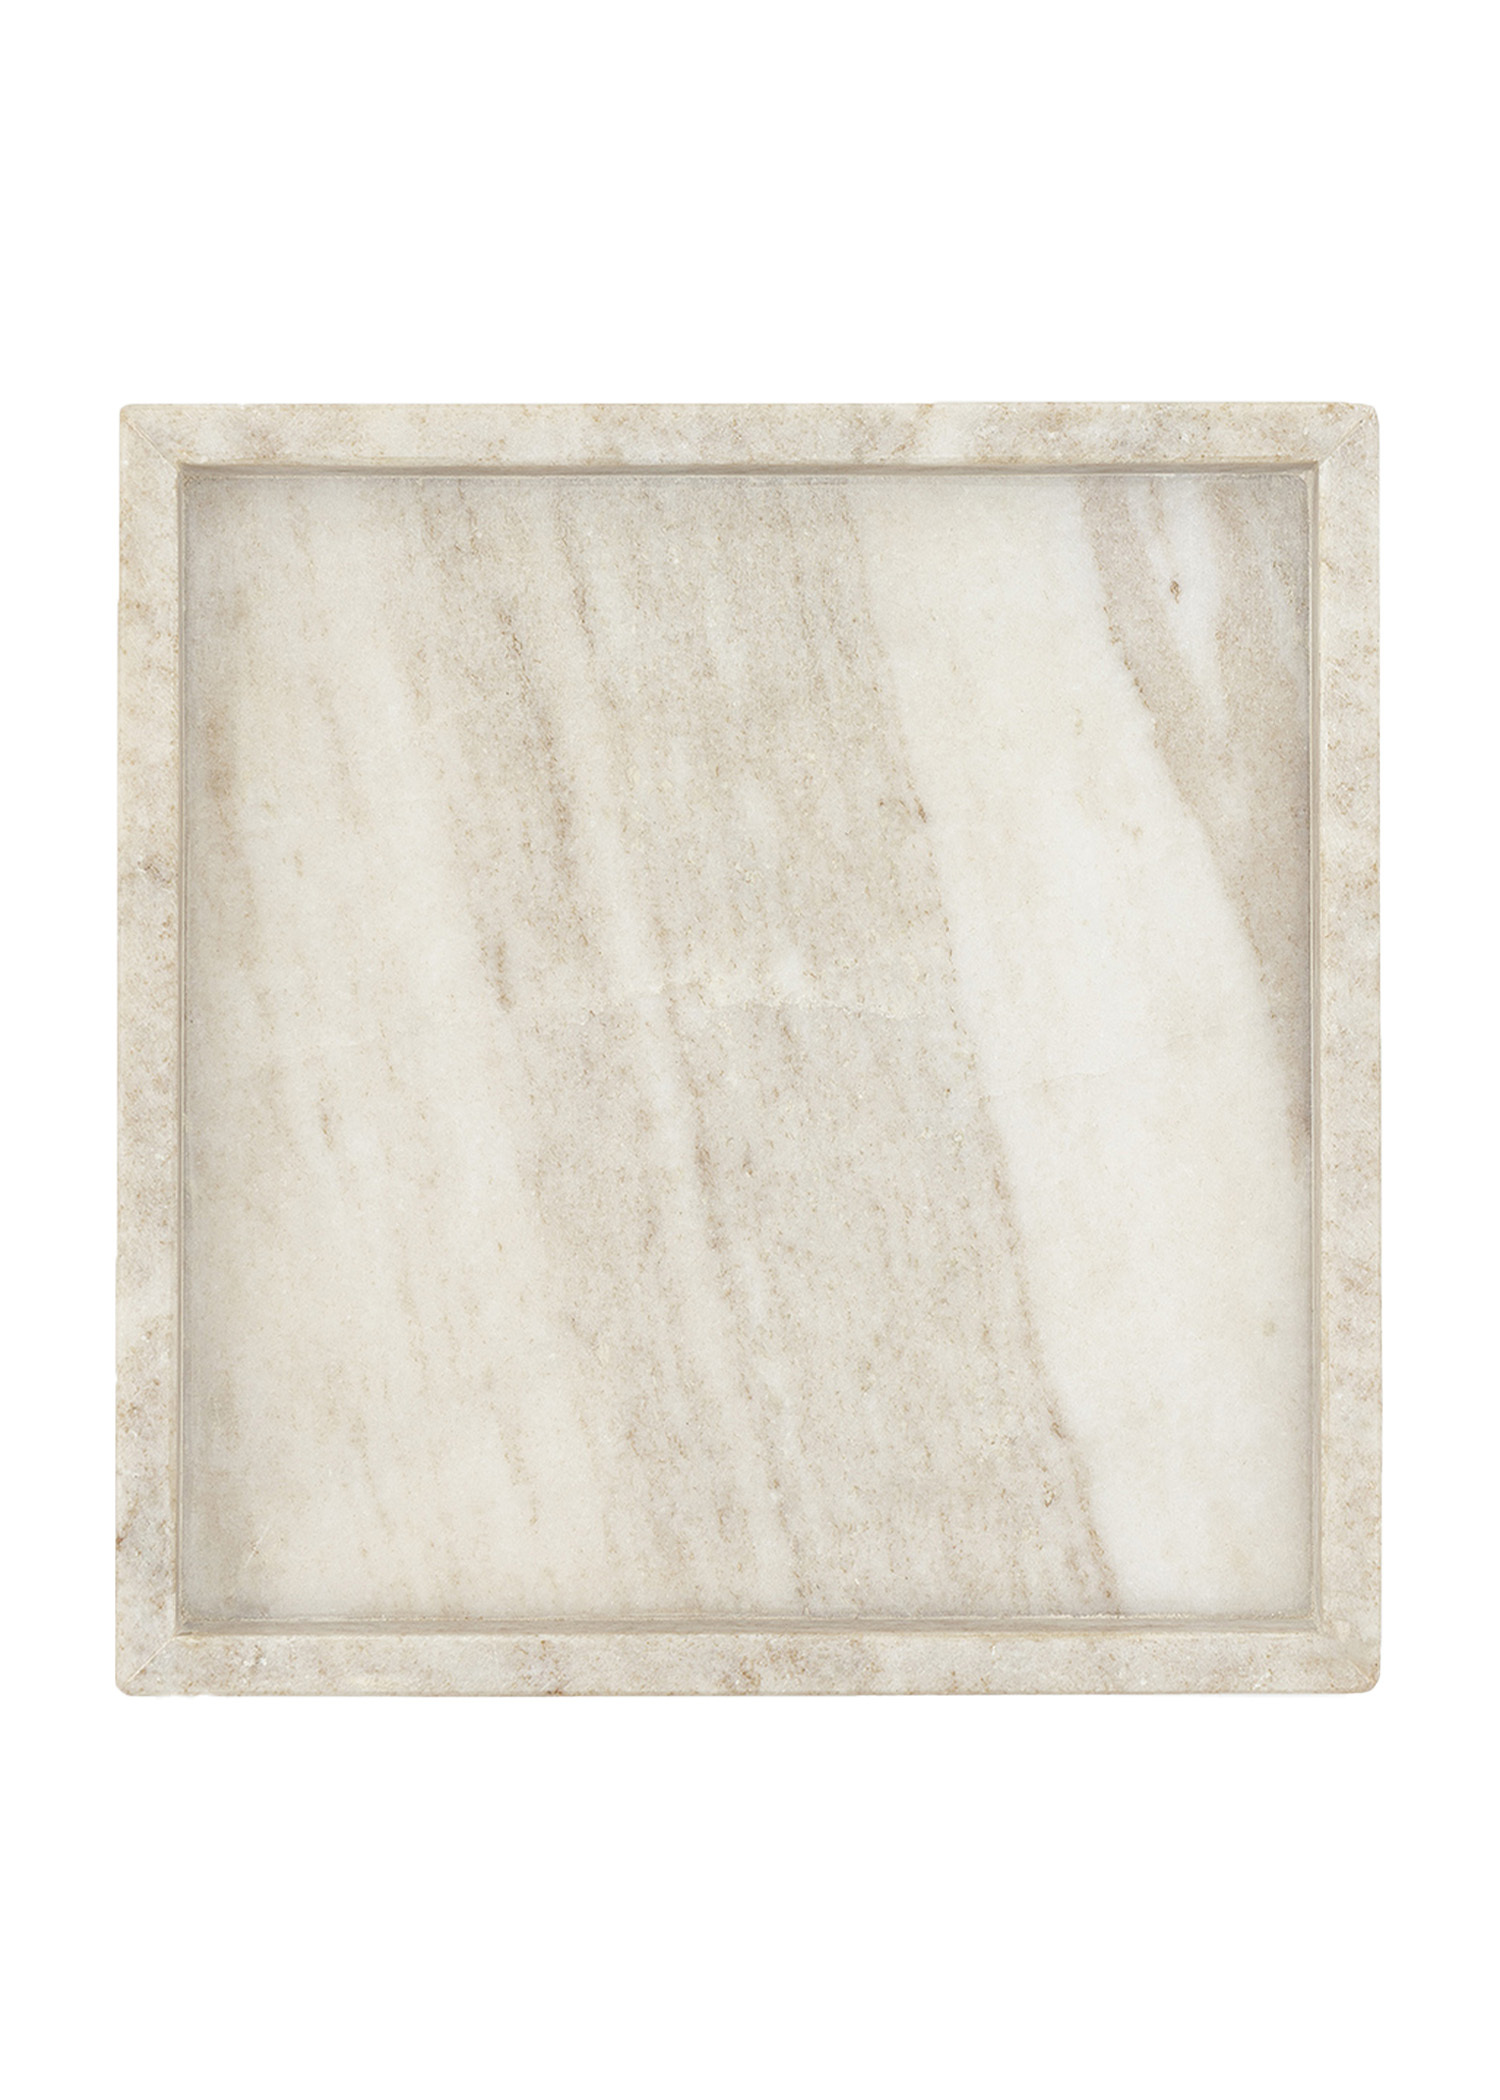 Small marble tray